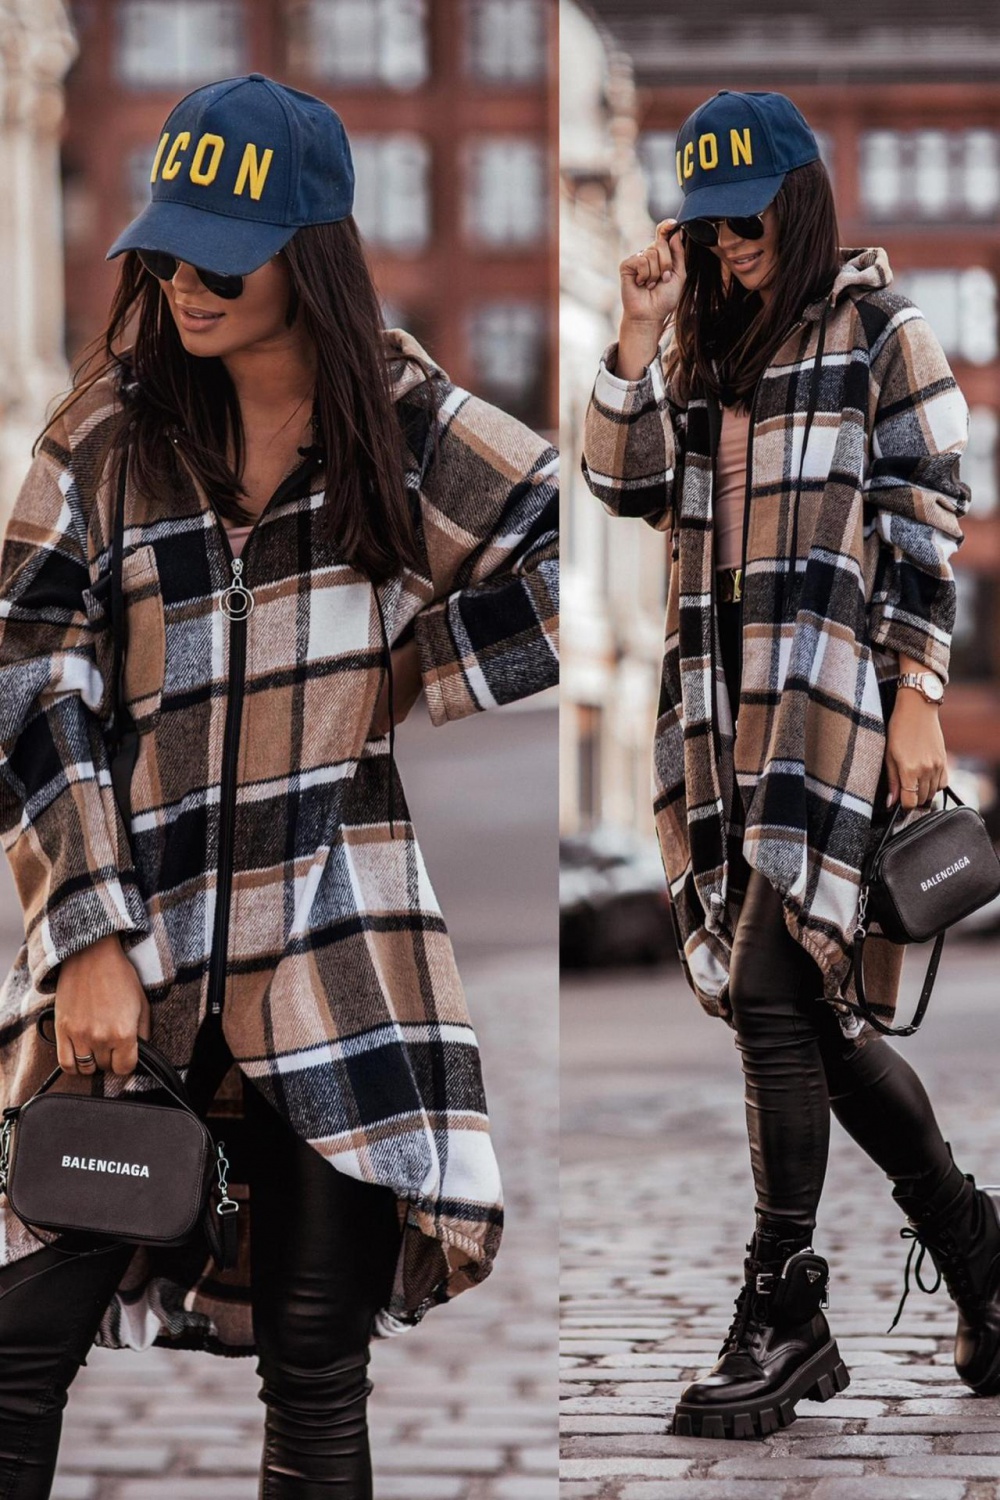 Hooded zip tops European style Casual coat for women